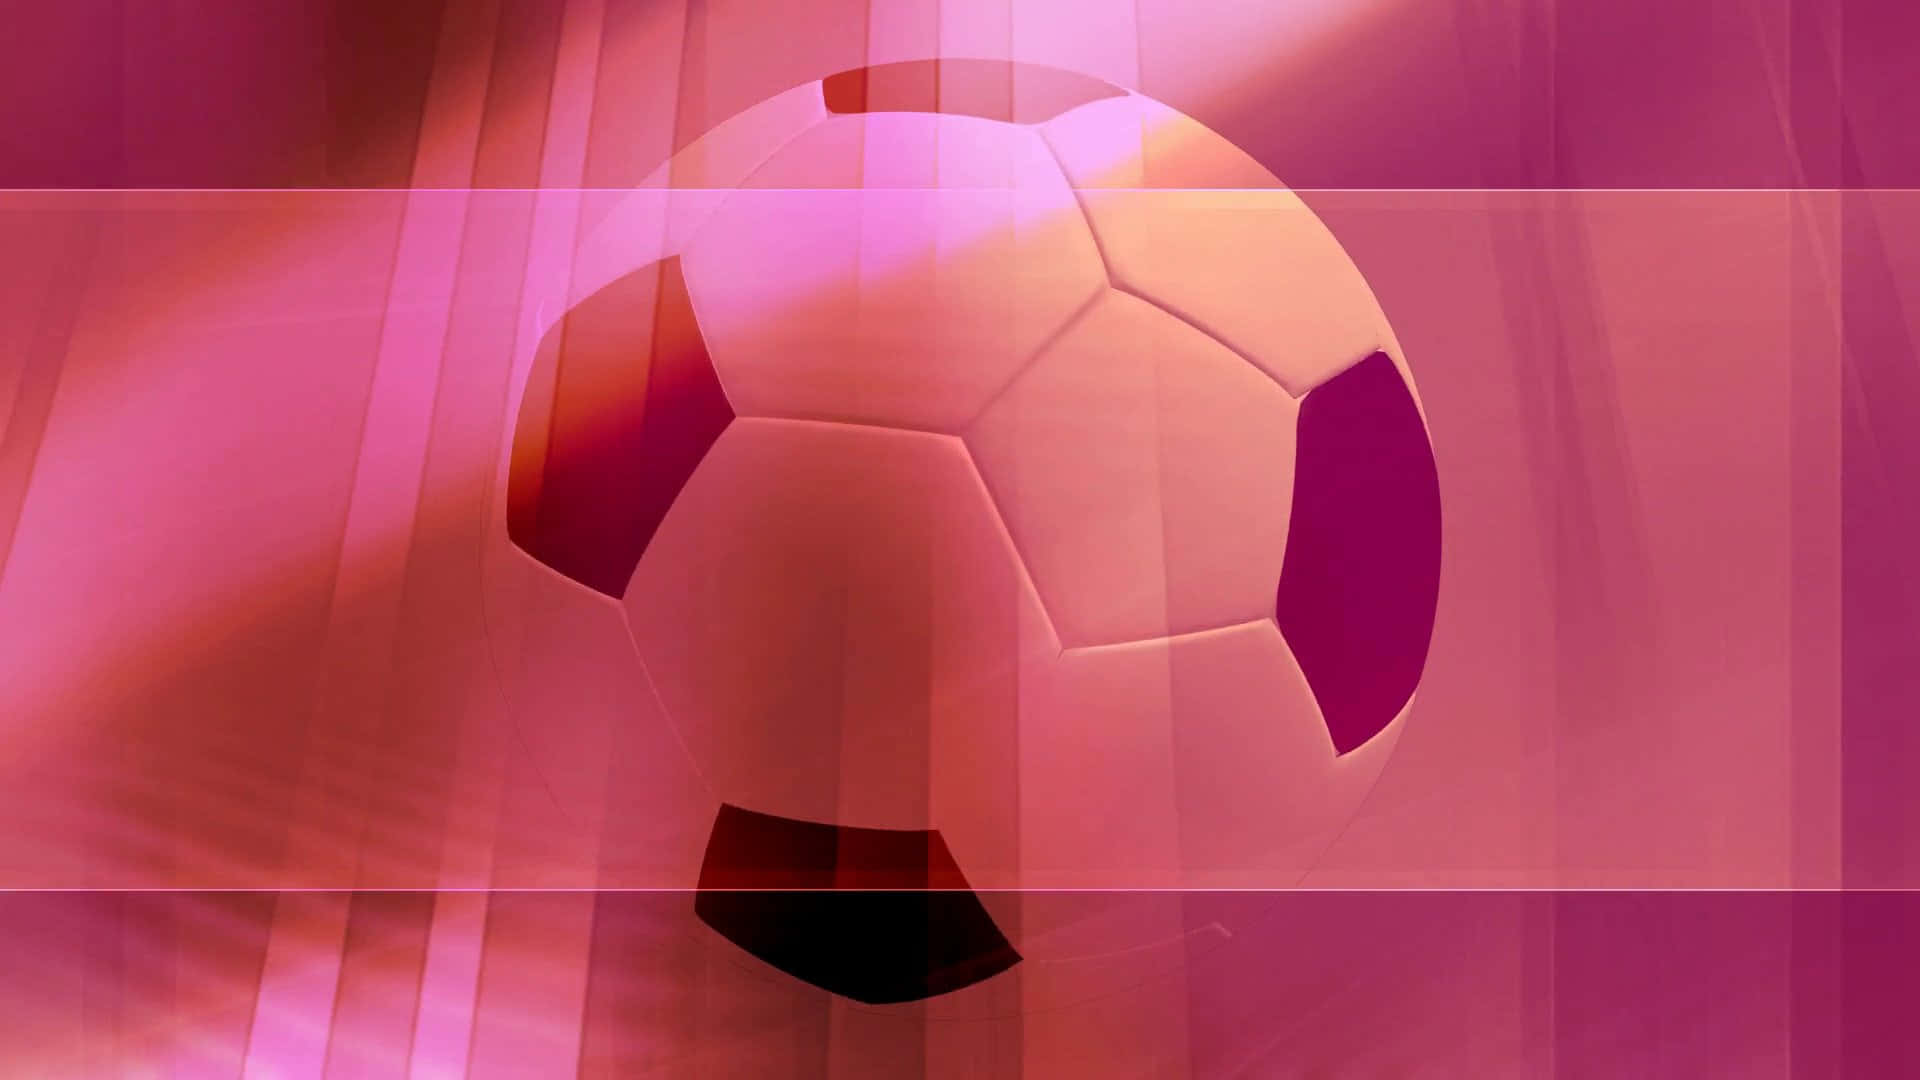 Stylish Pink Soccer Ball on Vibrant Background Wallpaper